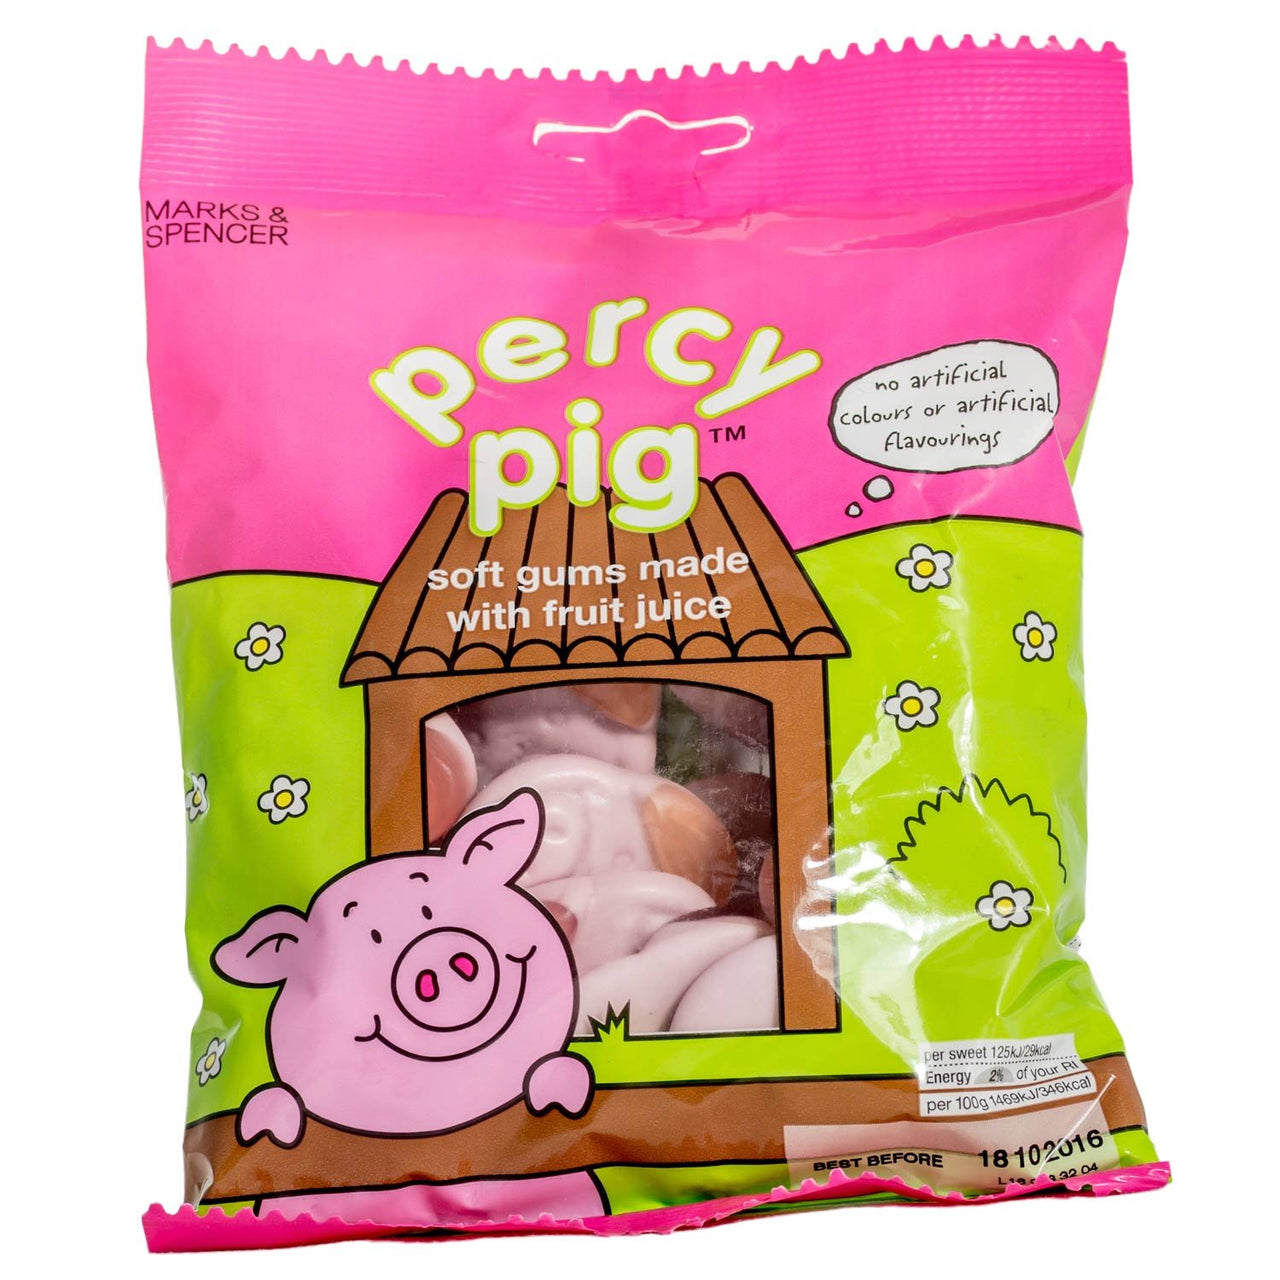 M&S Veggie Percy pig